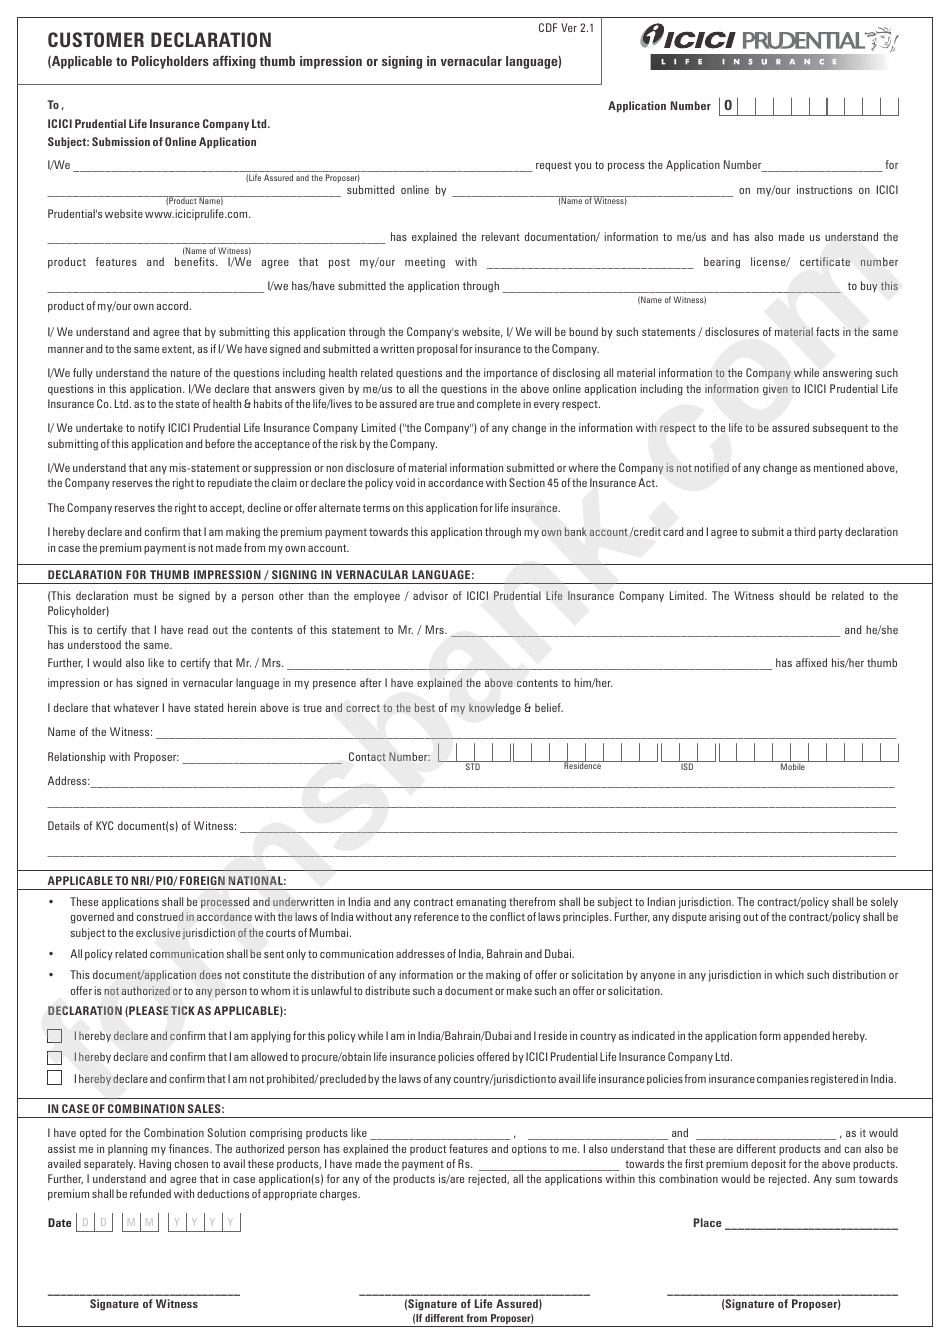 Customer Declaration Form - Prudential Life Insurance